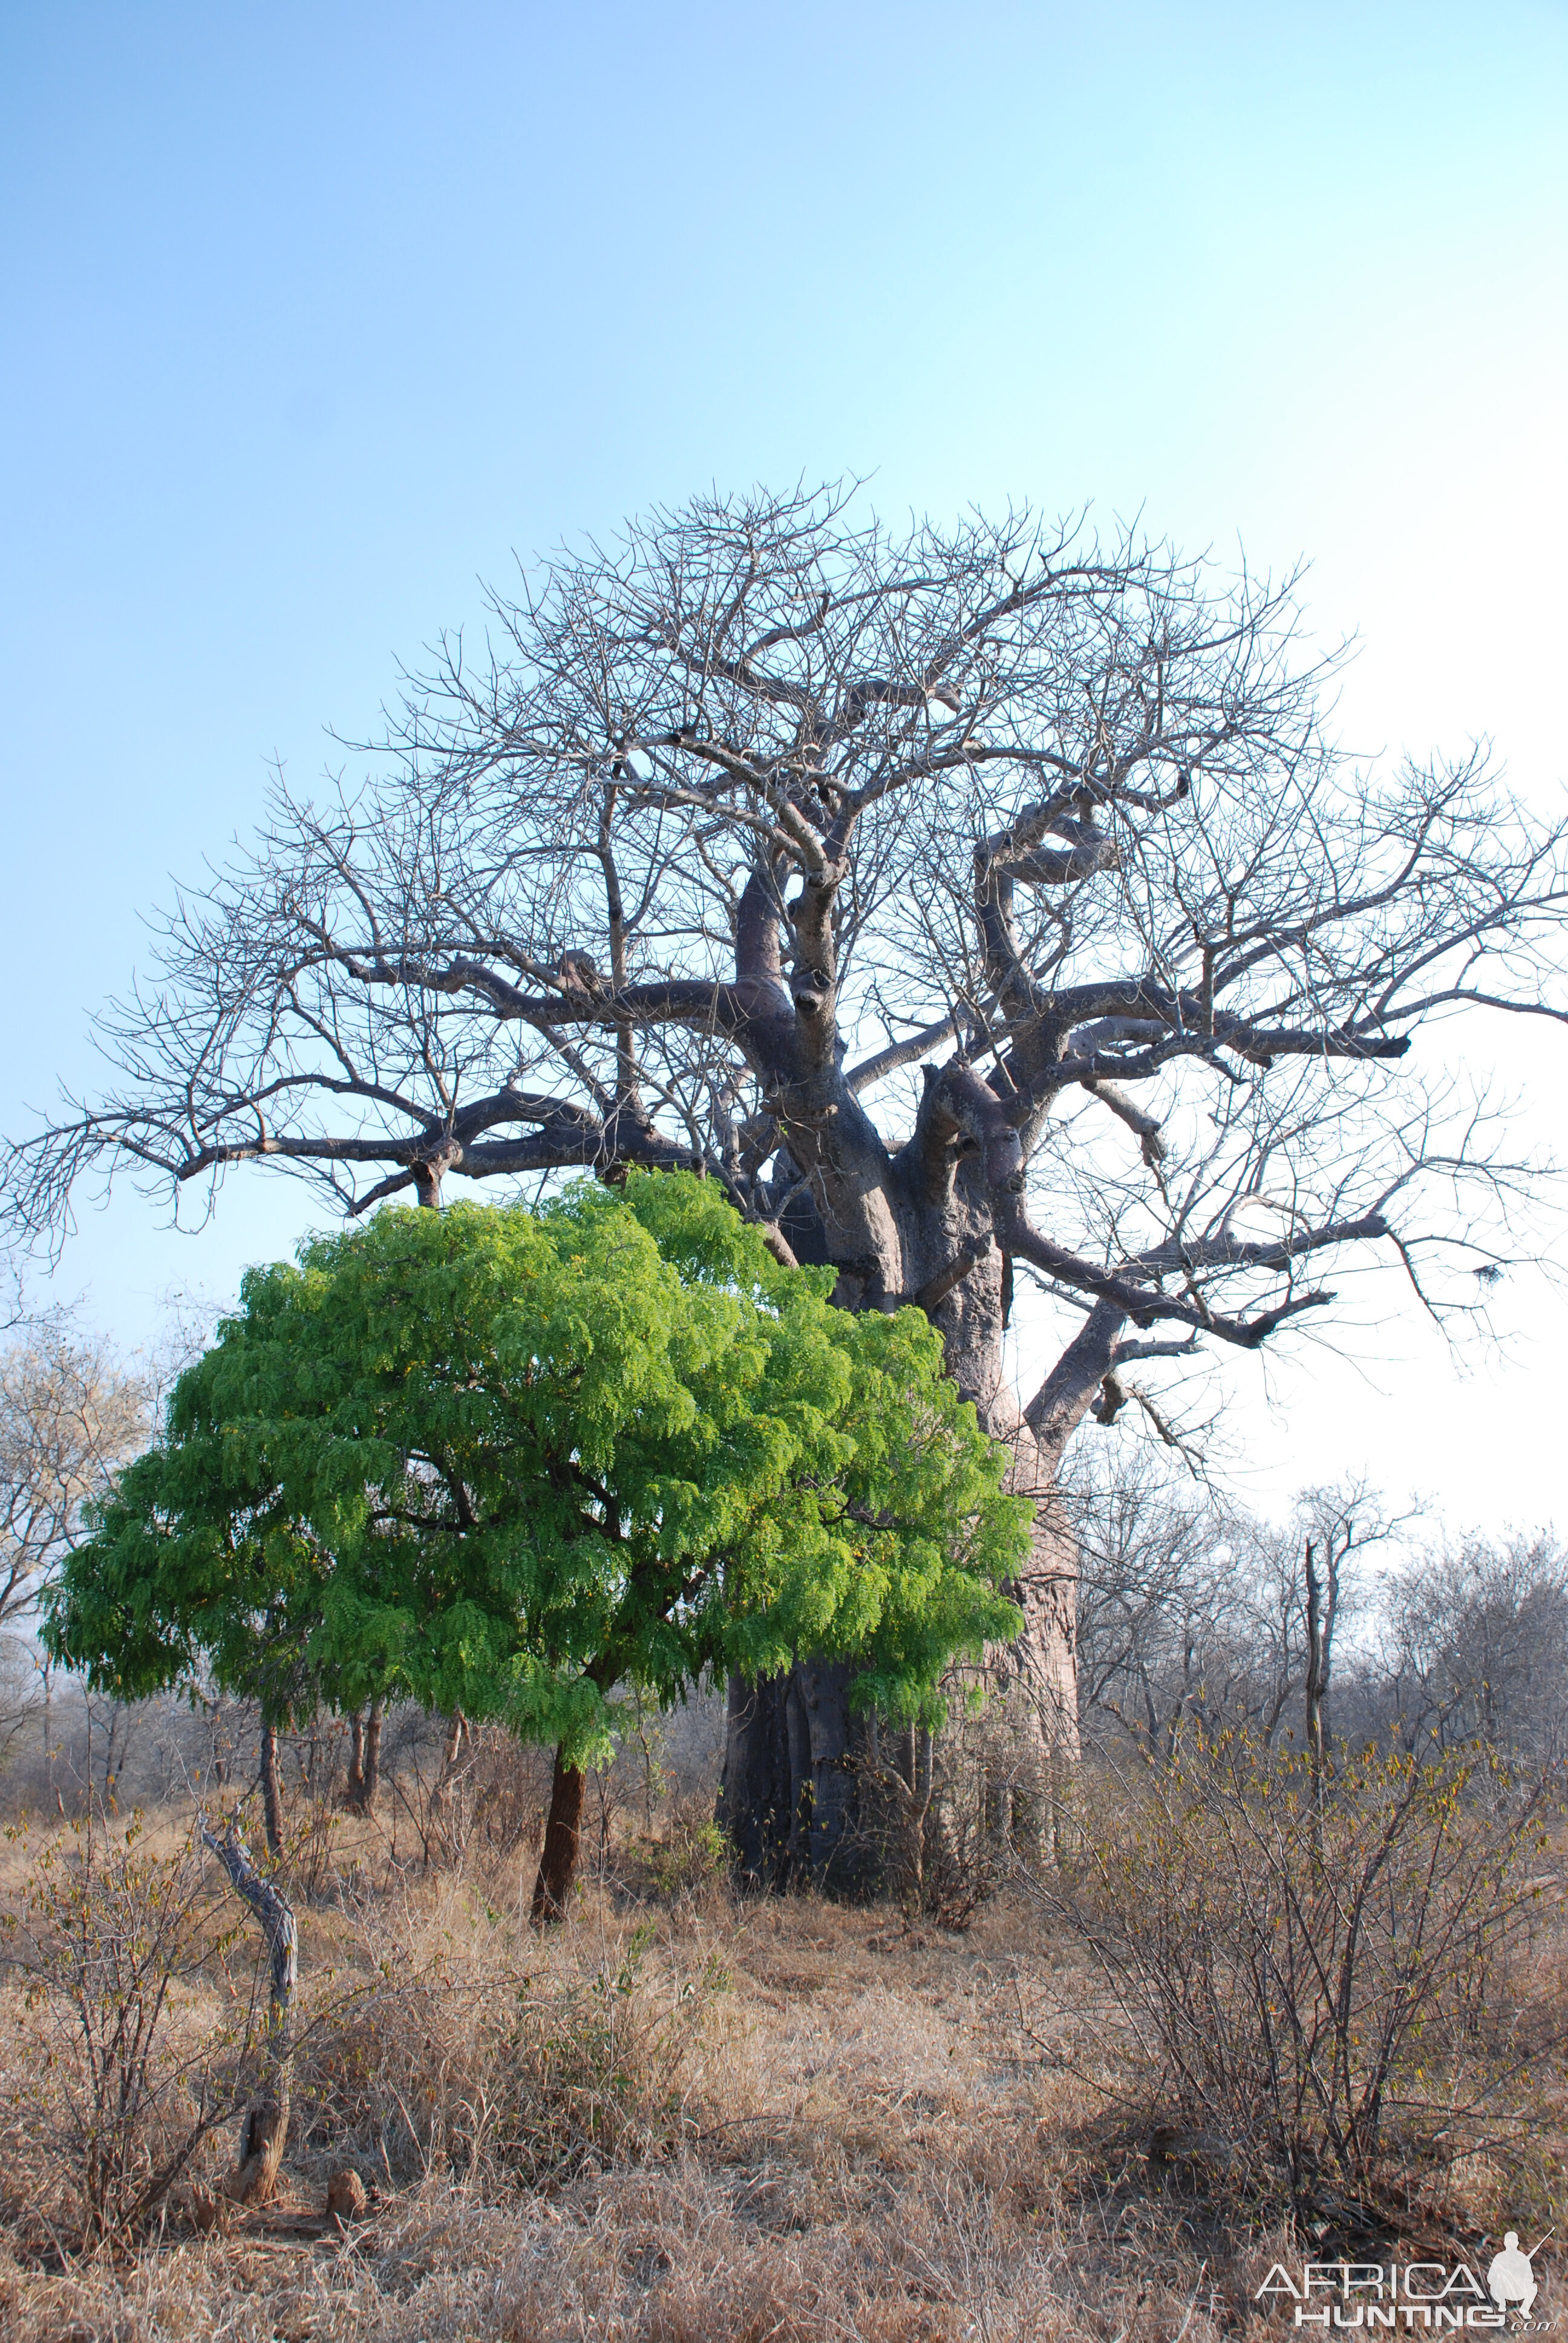 Baobab, again